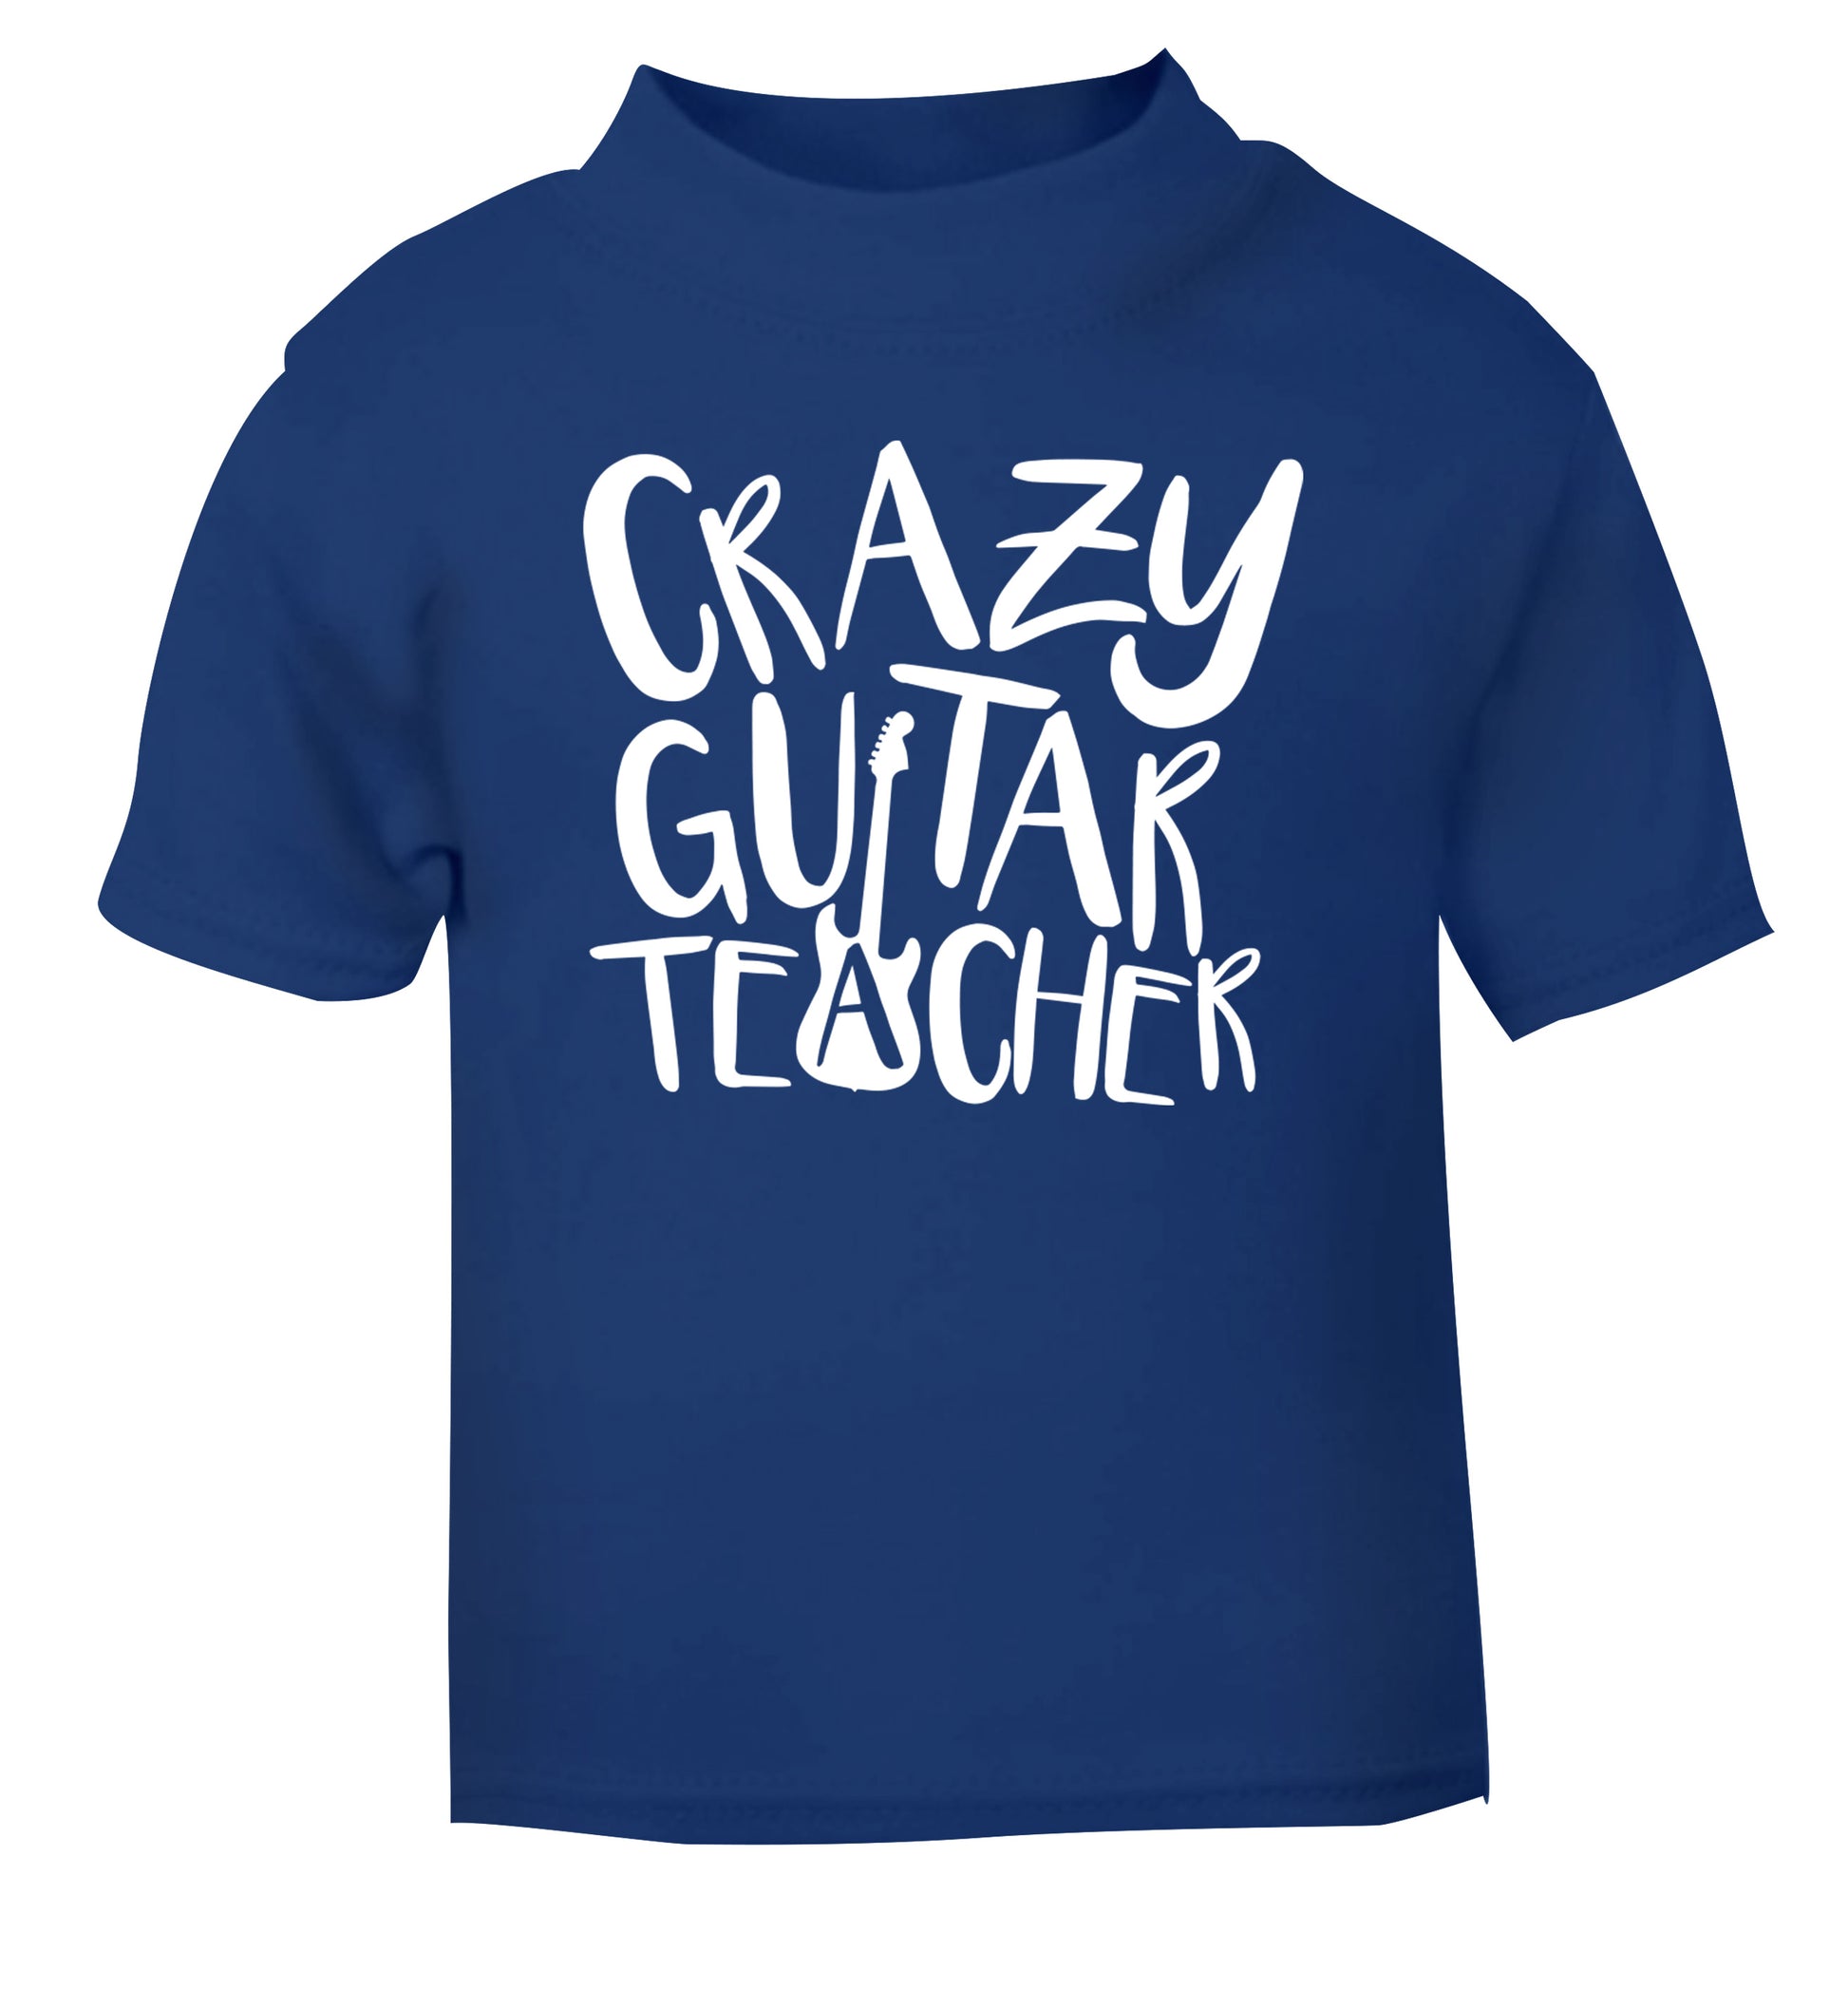 Crazy guitar teacher blue Baby Toddler Tshirt 2 Years